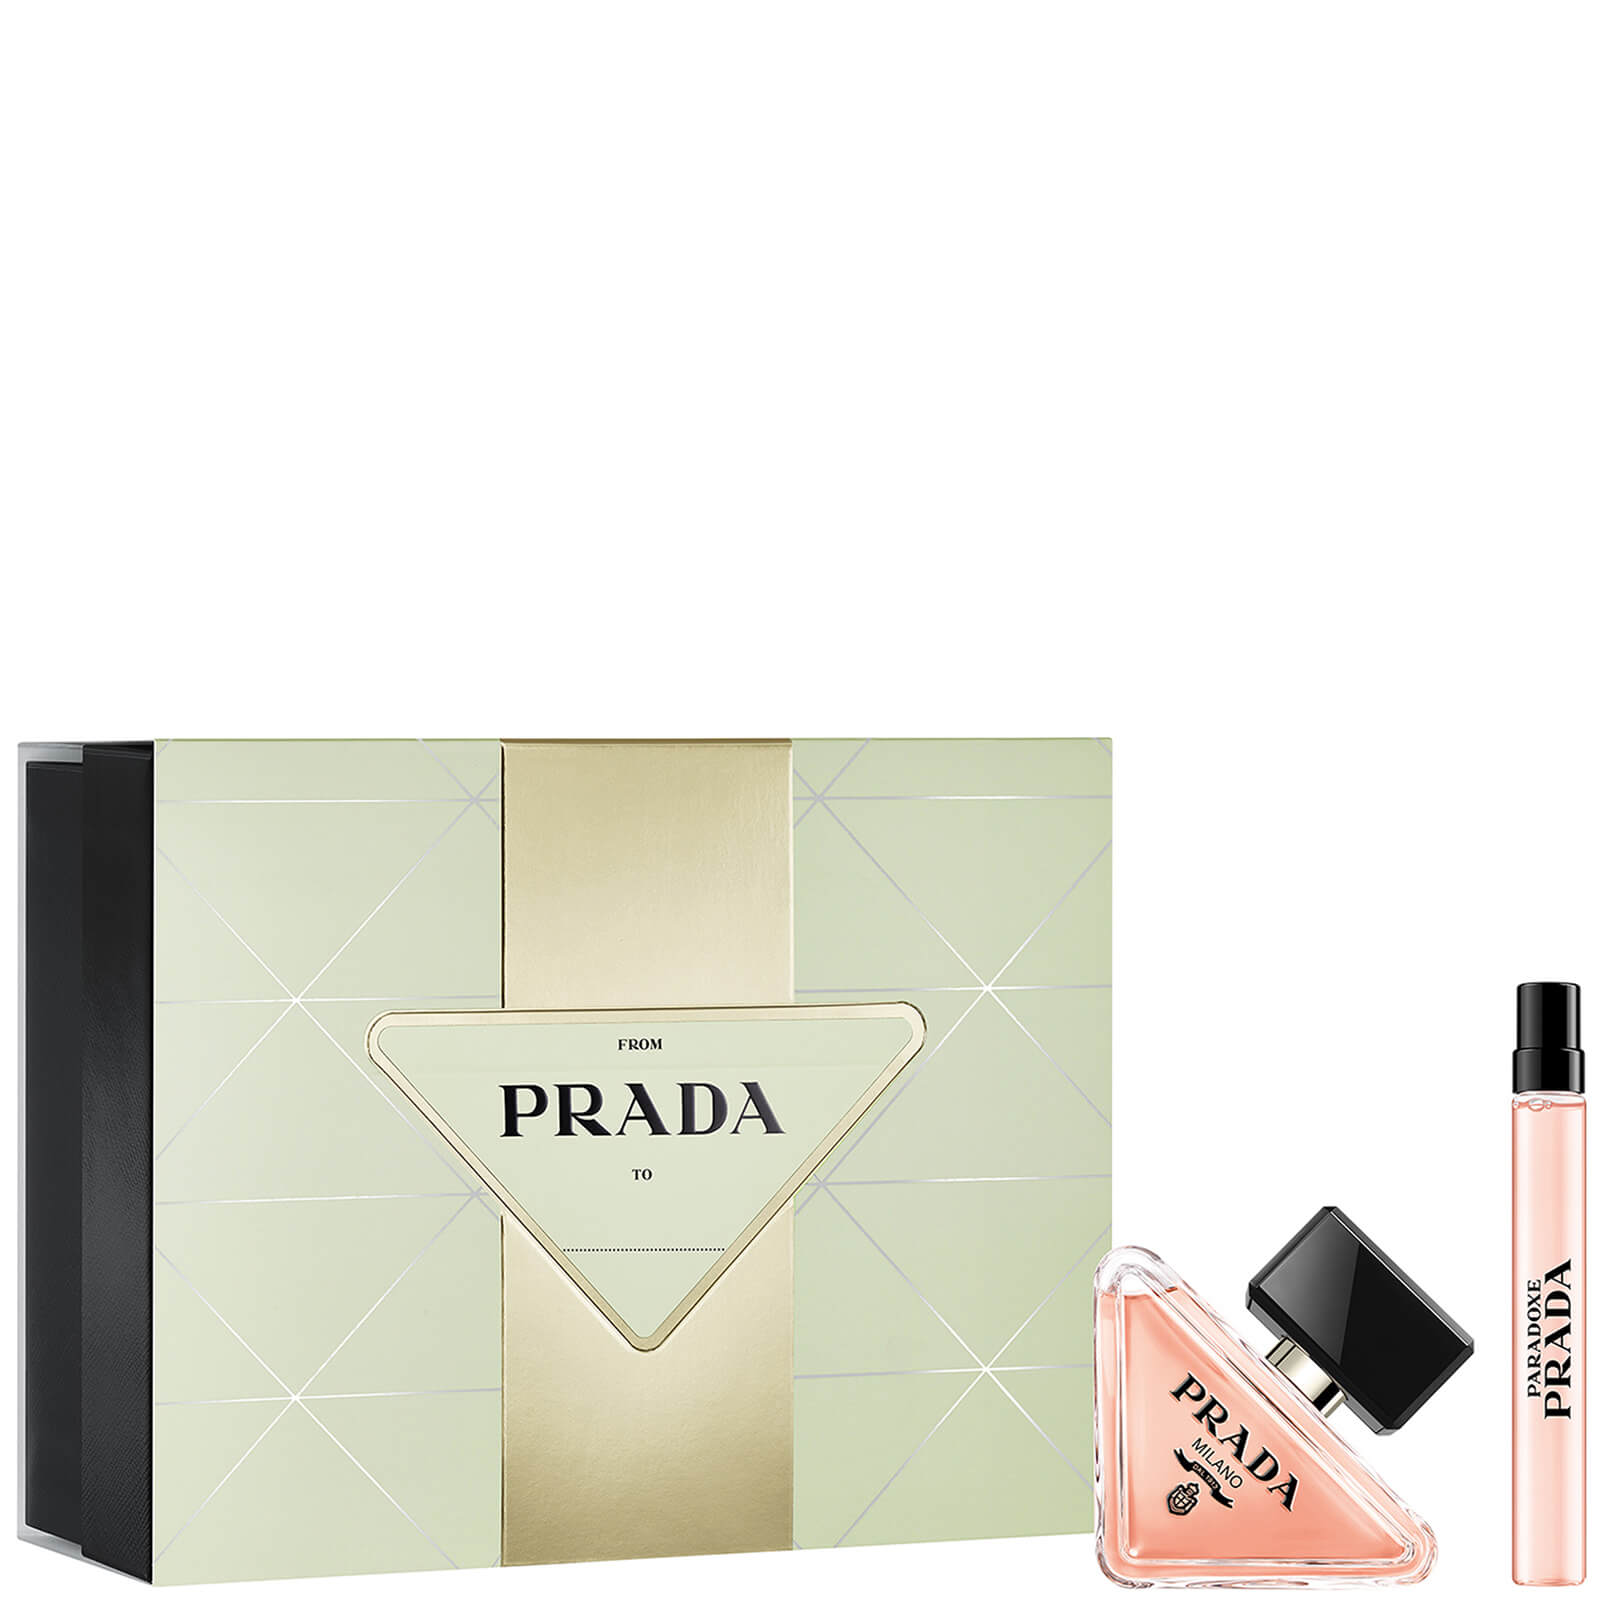 prada paradoxe eau de parfum 50ml gift set (worth £110.40)